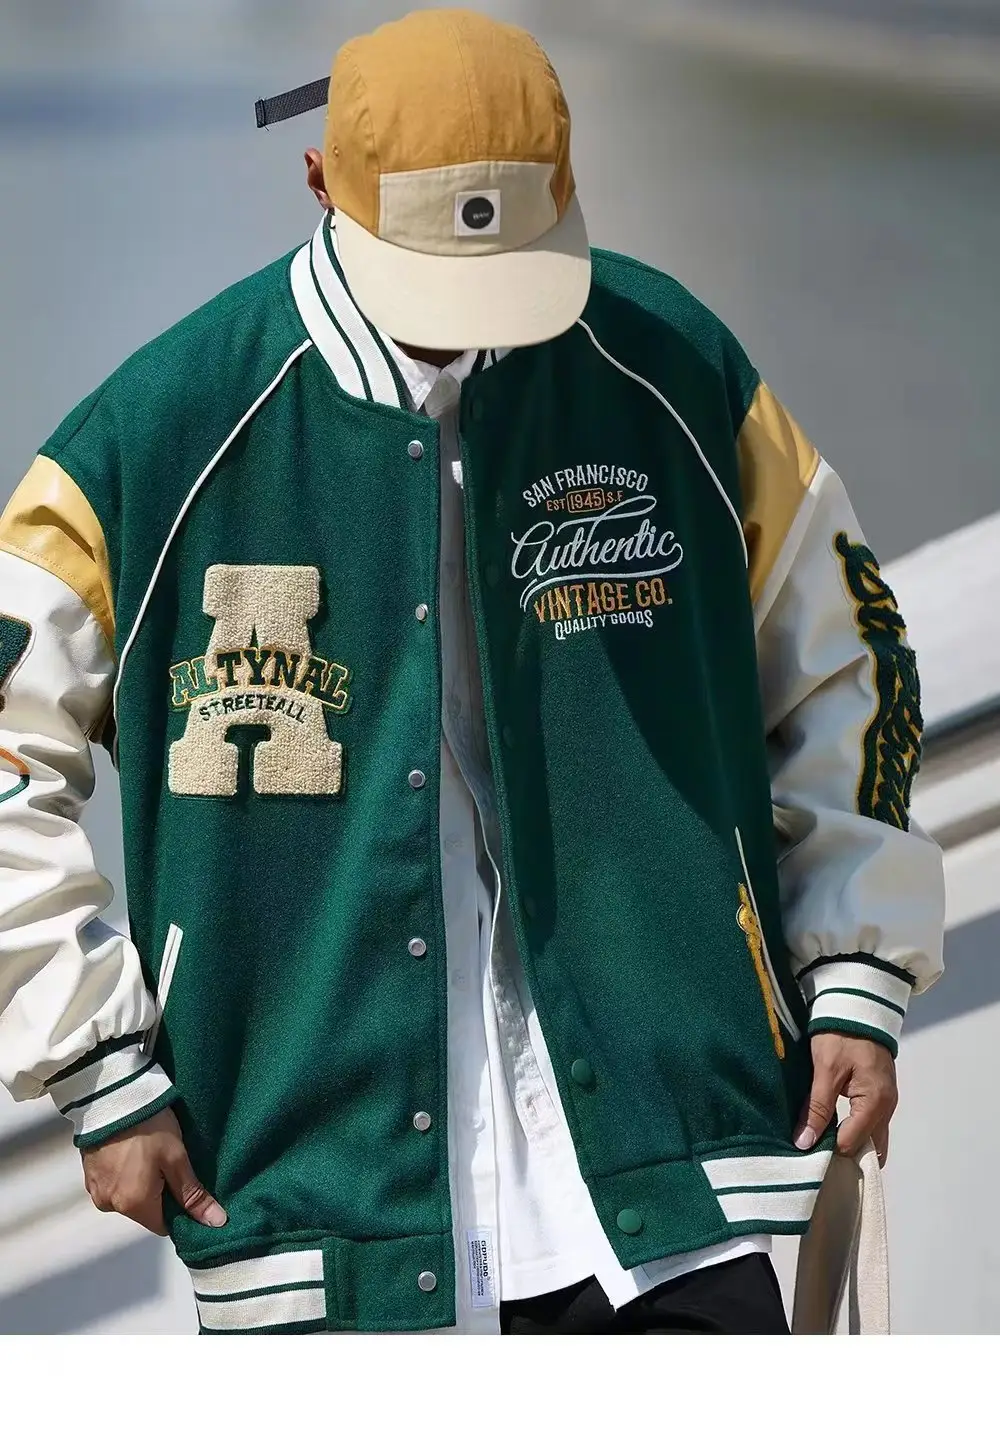 Großhandel Unisex Chenille Stickerei Leder ärmel Baseball Letterman übergroße Uni-Jacke für Männer